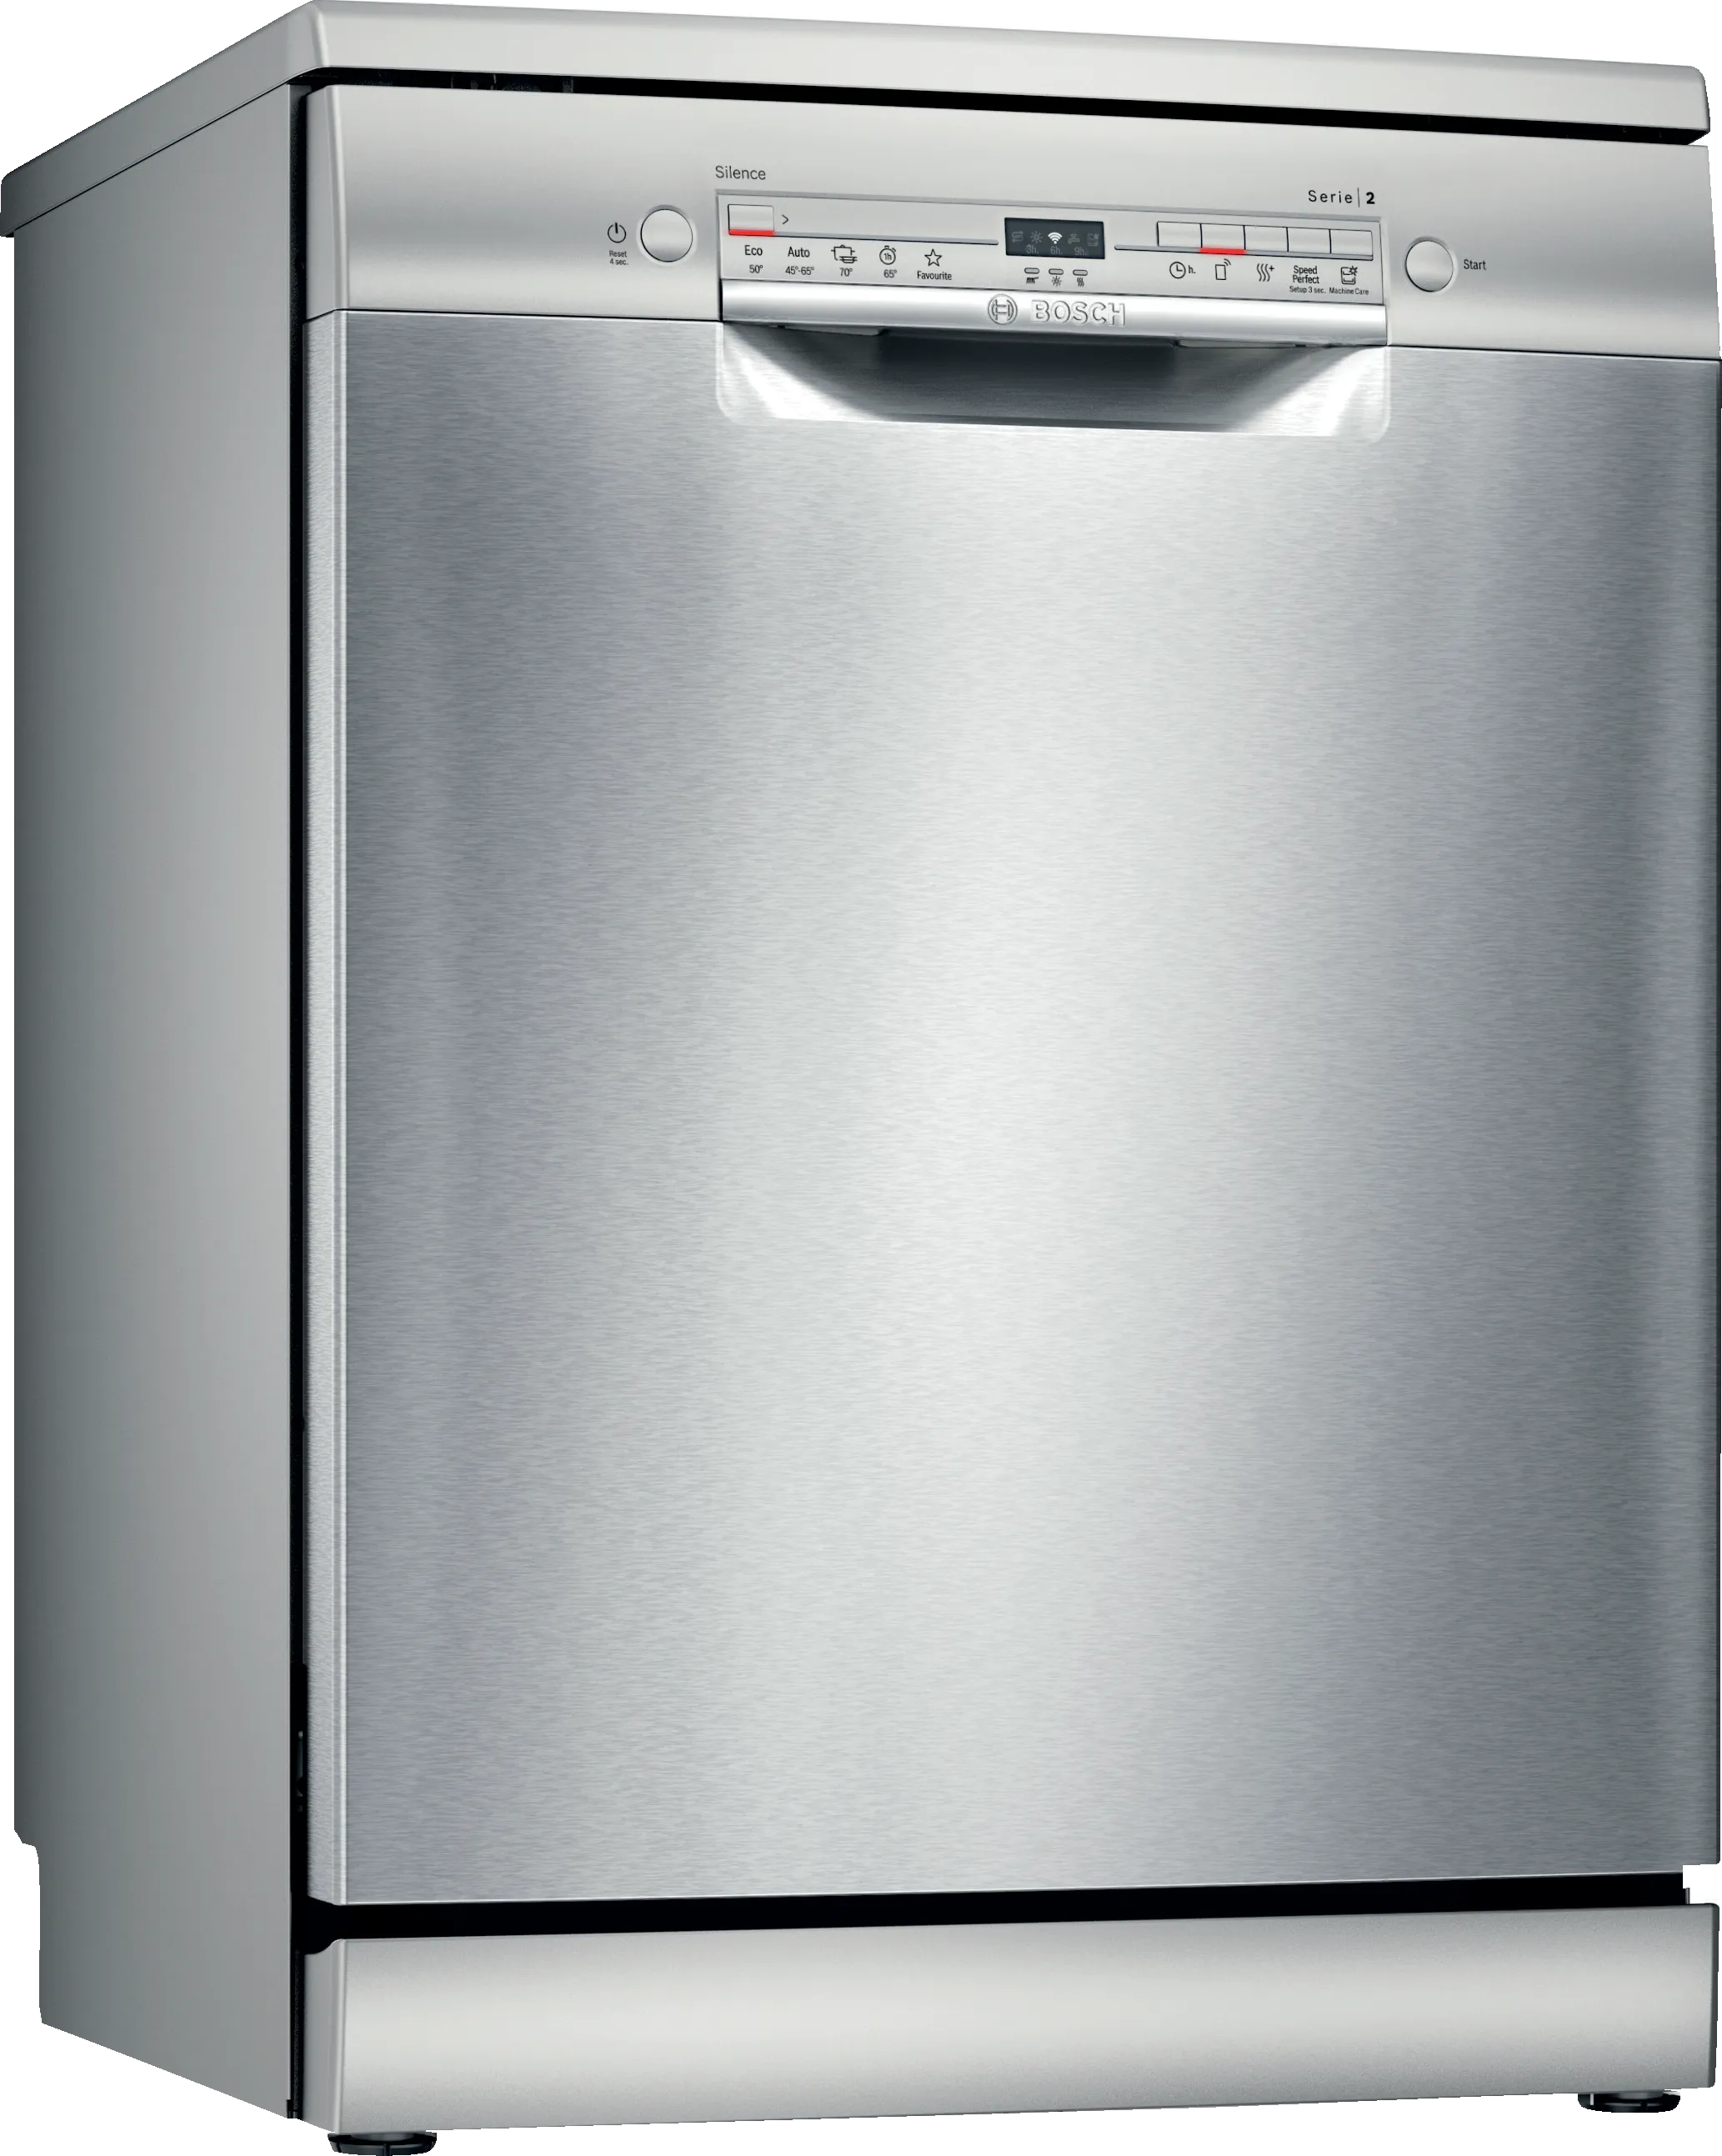 Series 2 Free-standing dishwasher 60 cm silver inox 